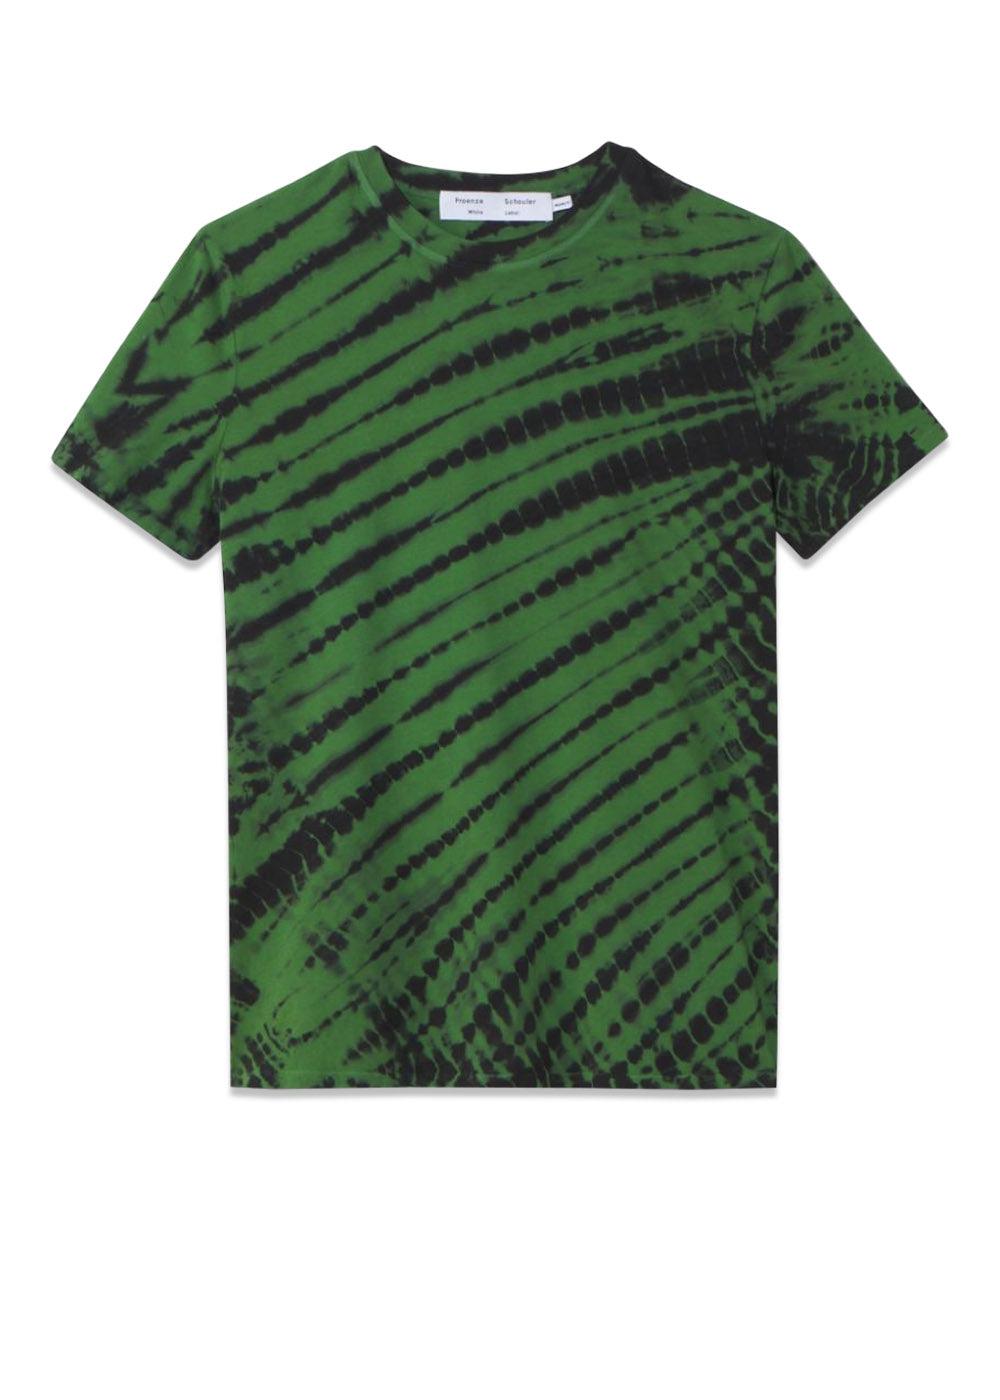 Proenza Schoulers Tie Dye T-Shirt - Kelly Green/Black. Køb t-shirts her.